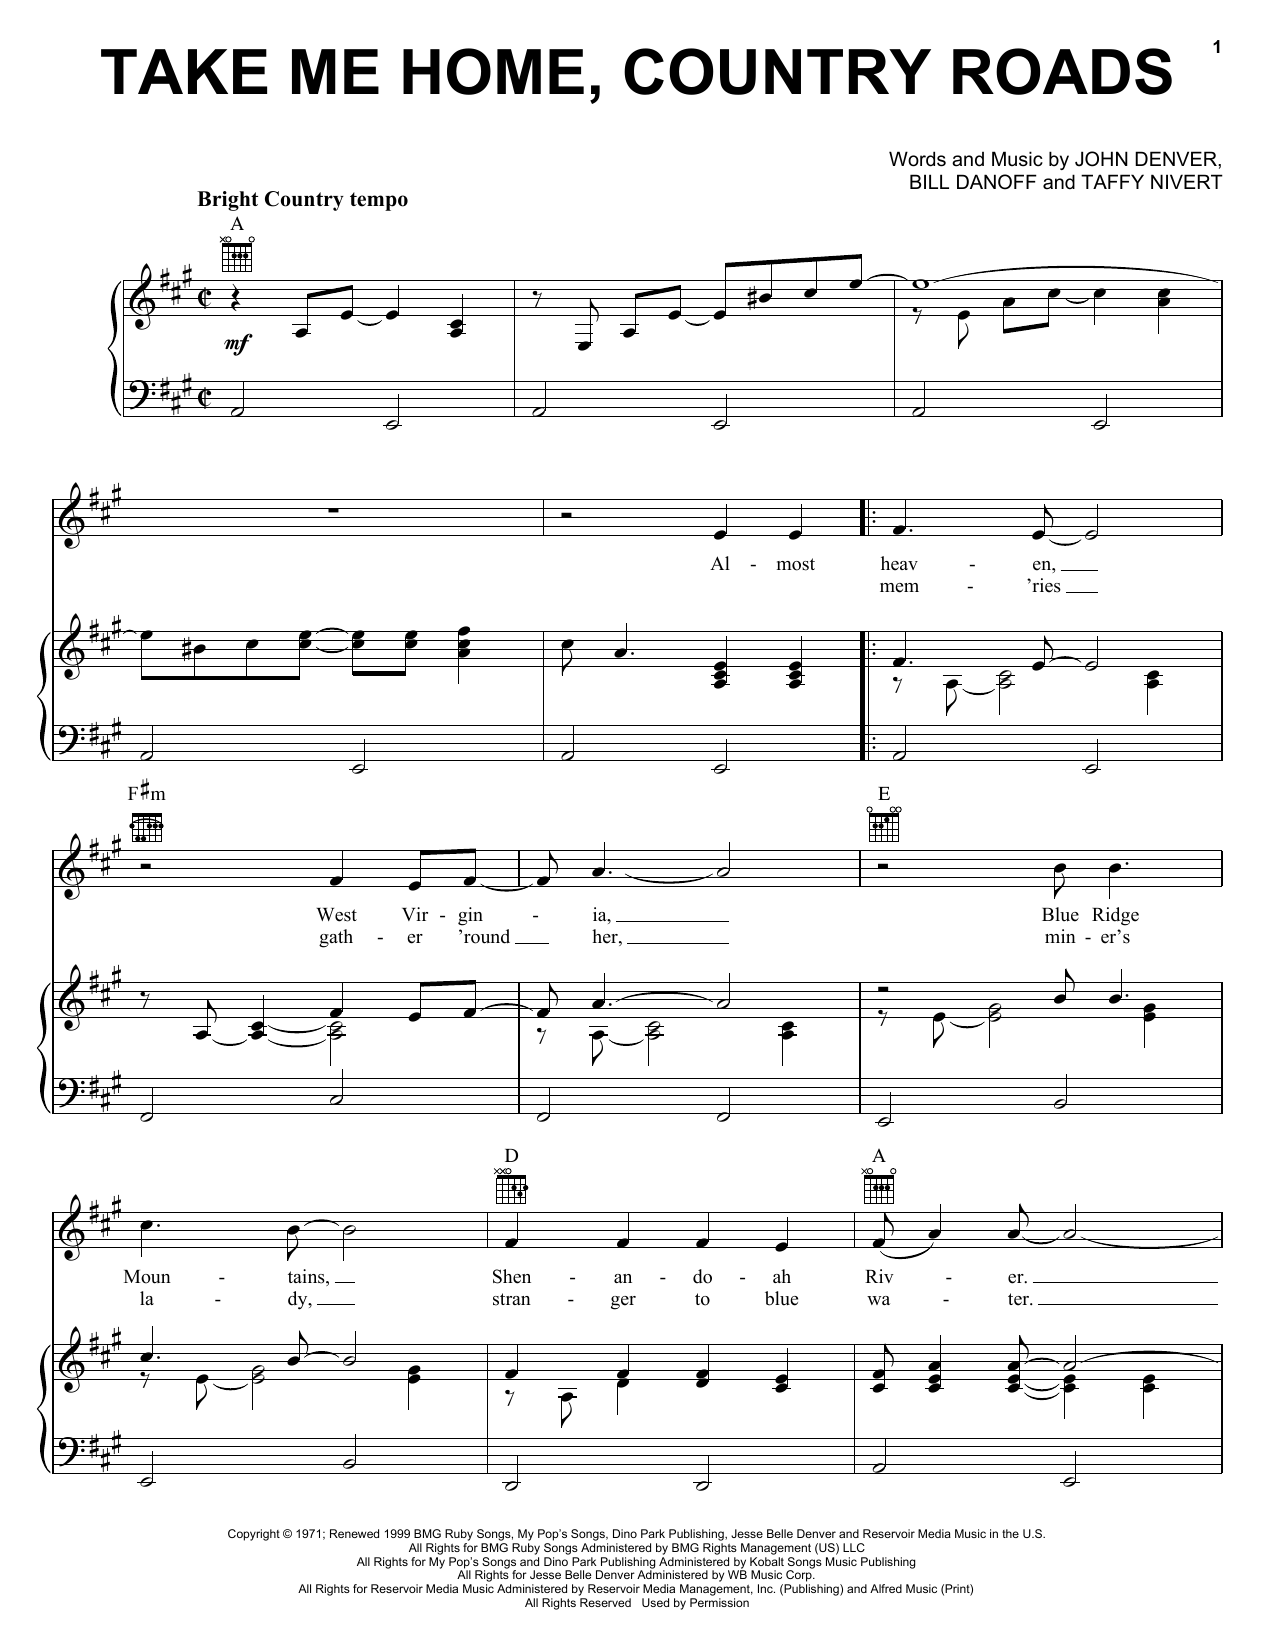 John Denver Take Me Home, Country Roads Sheet Music Notes & Chords for Melody Line, Lyrics & Chords - Download or Print PDF